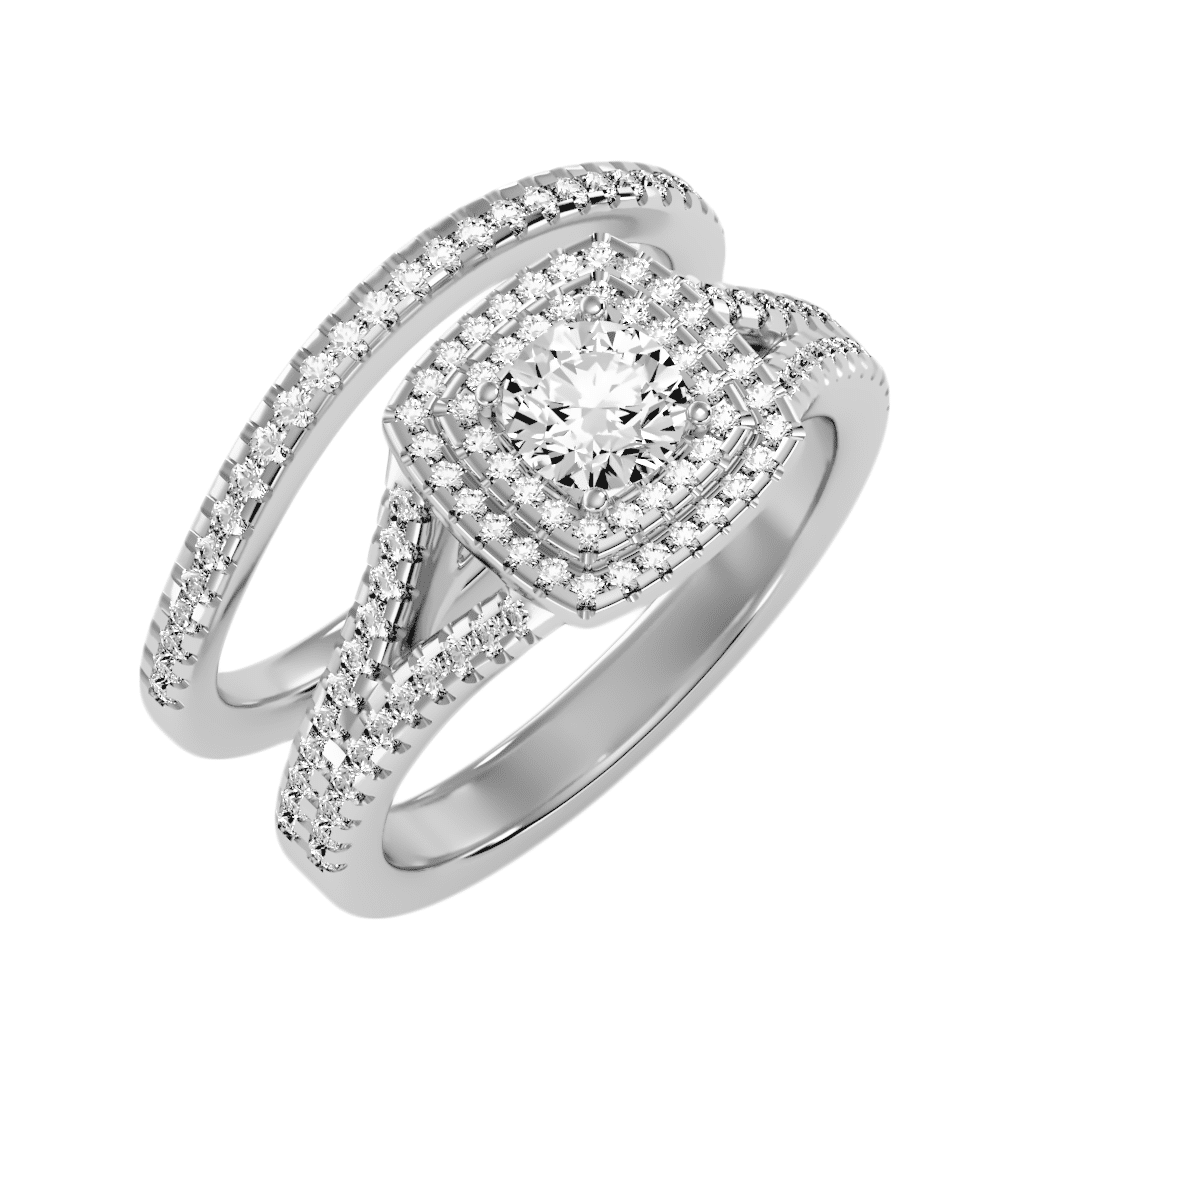 Double Halo Diamond Ring With Matching Wedding Band